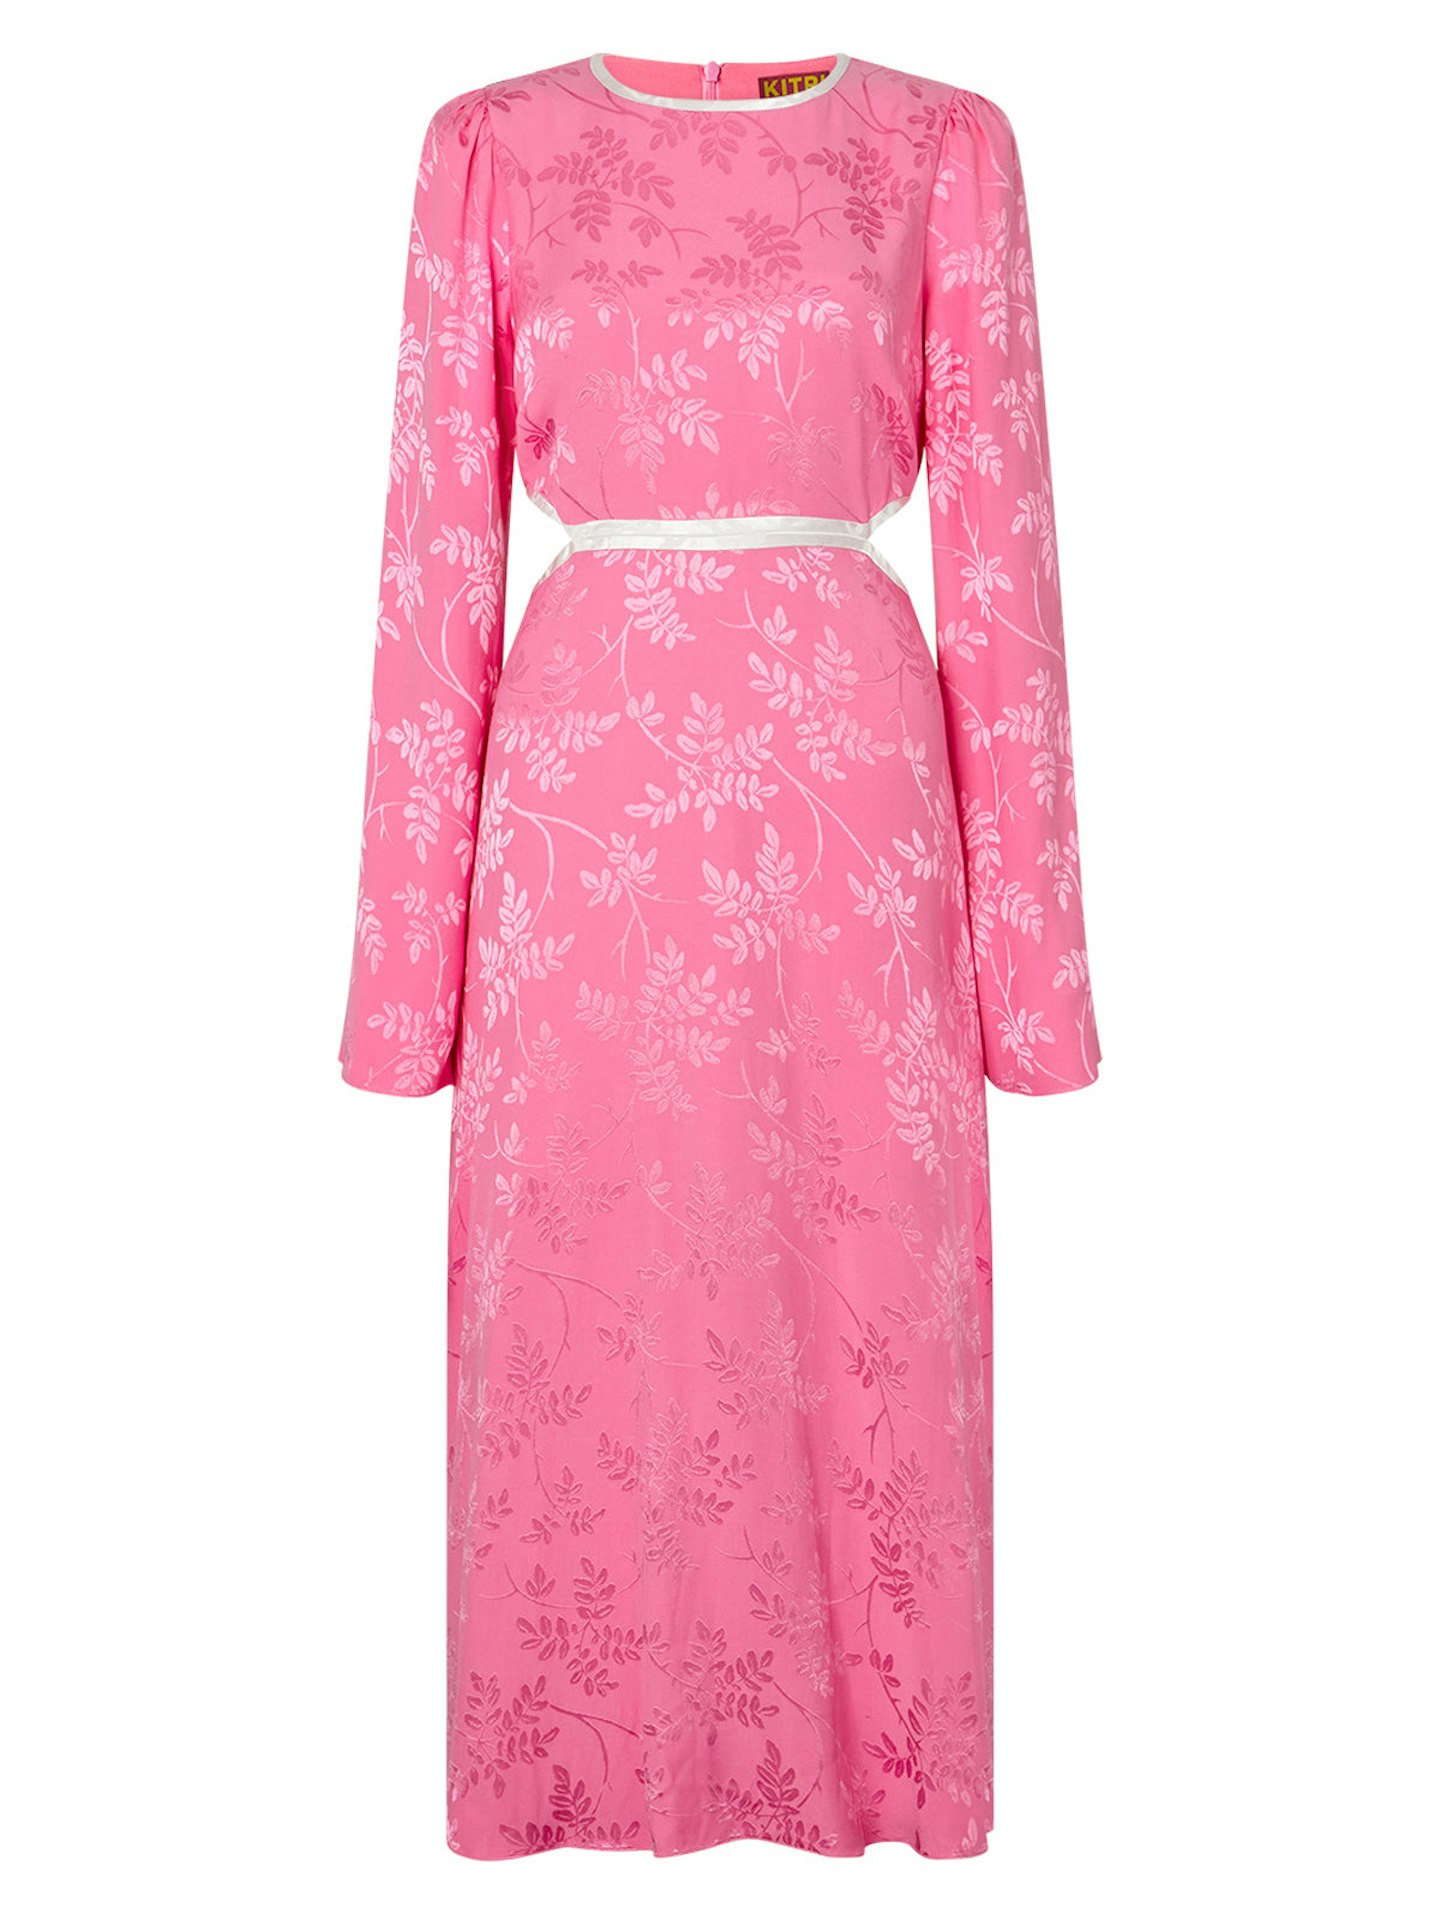 Kitri, Blythe Pink Floral Jacquard Dress